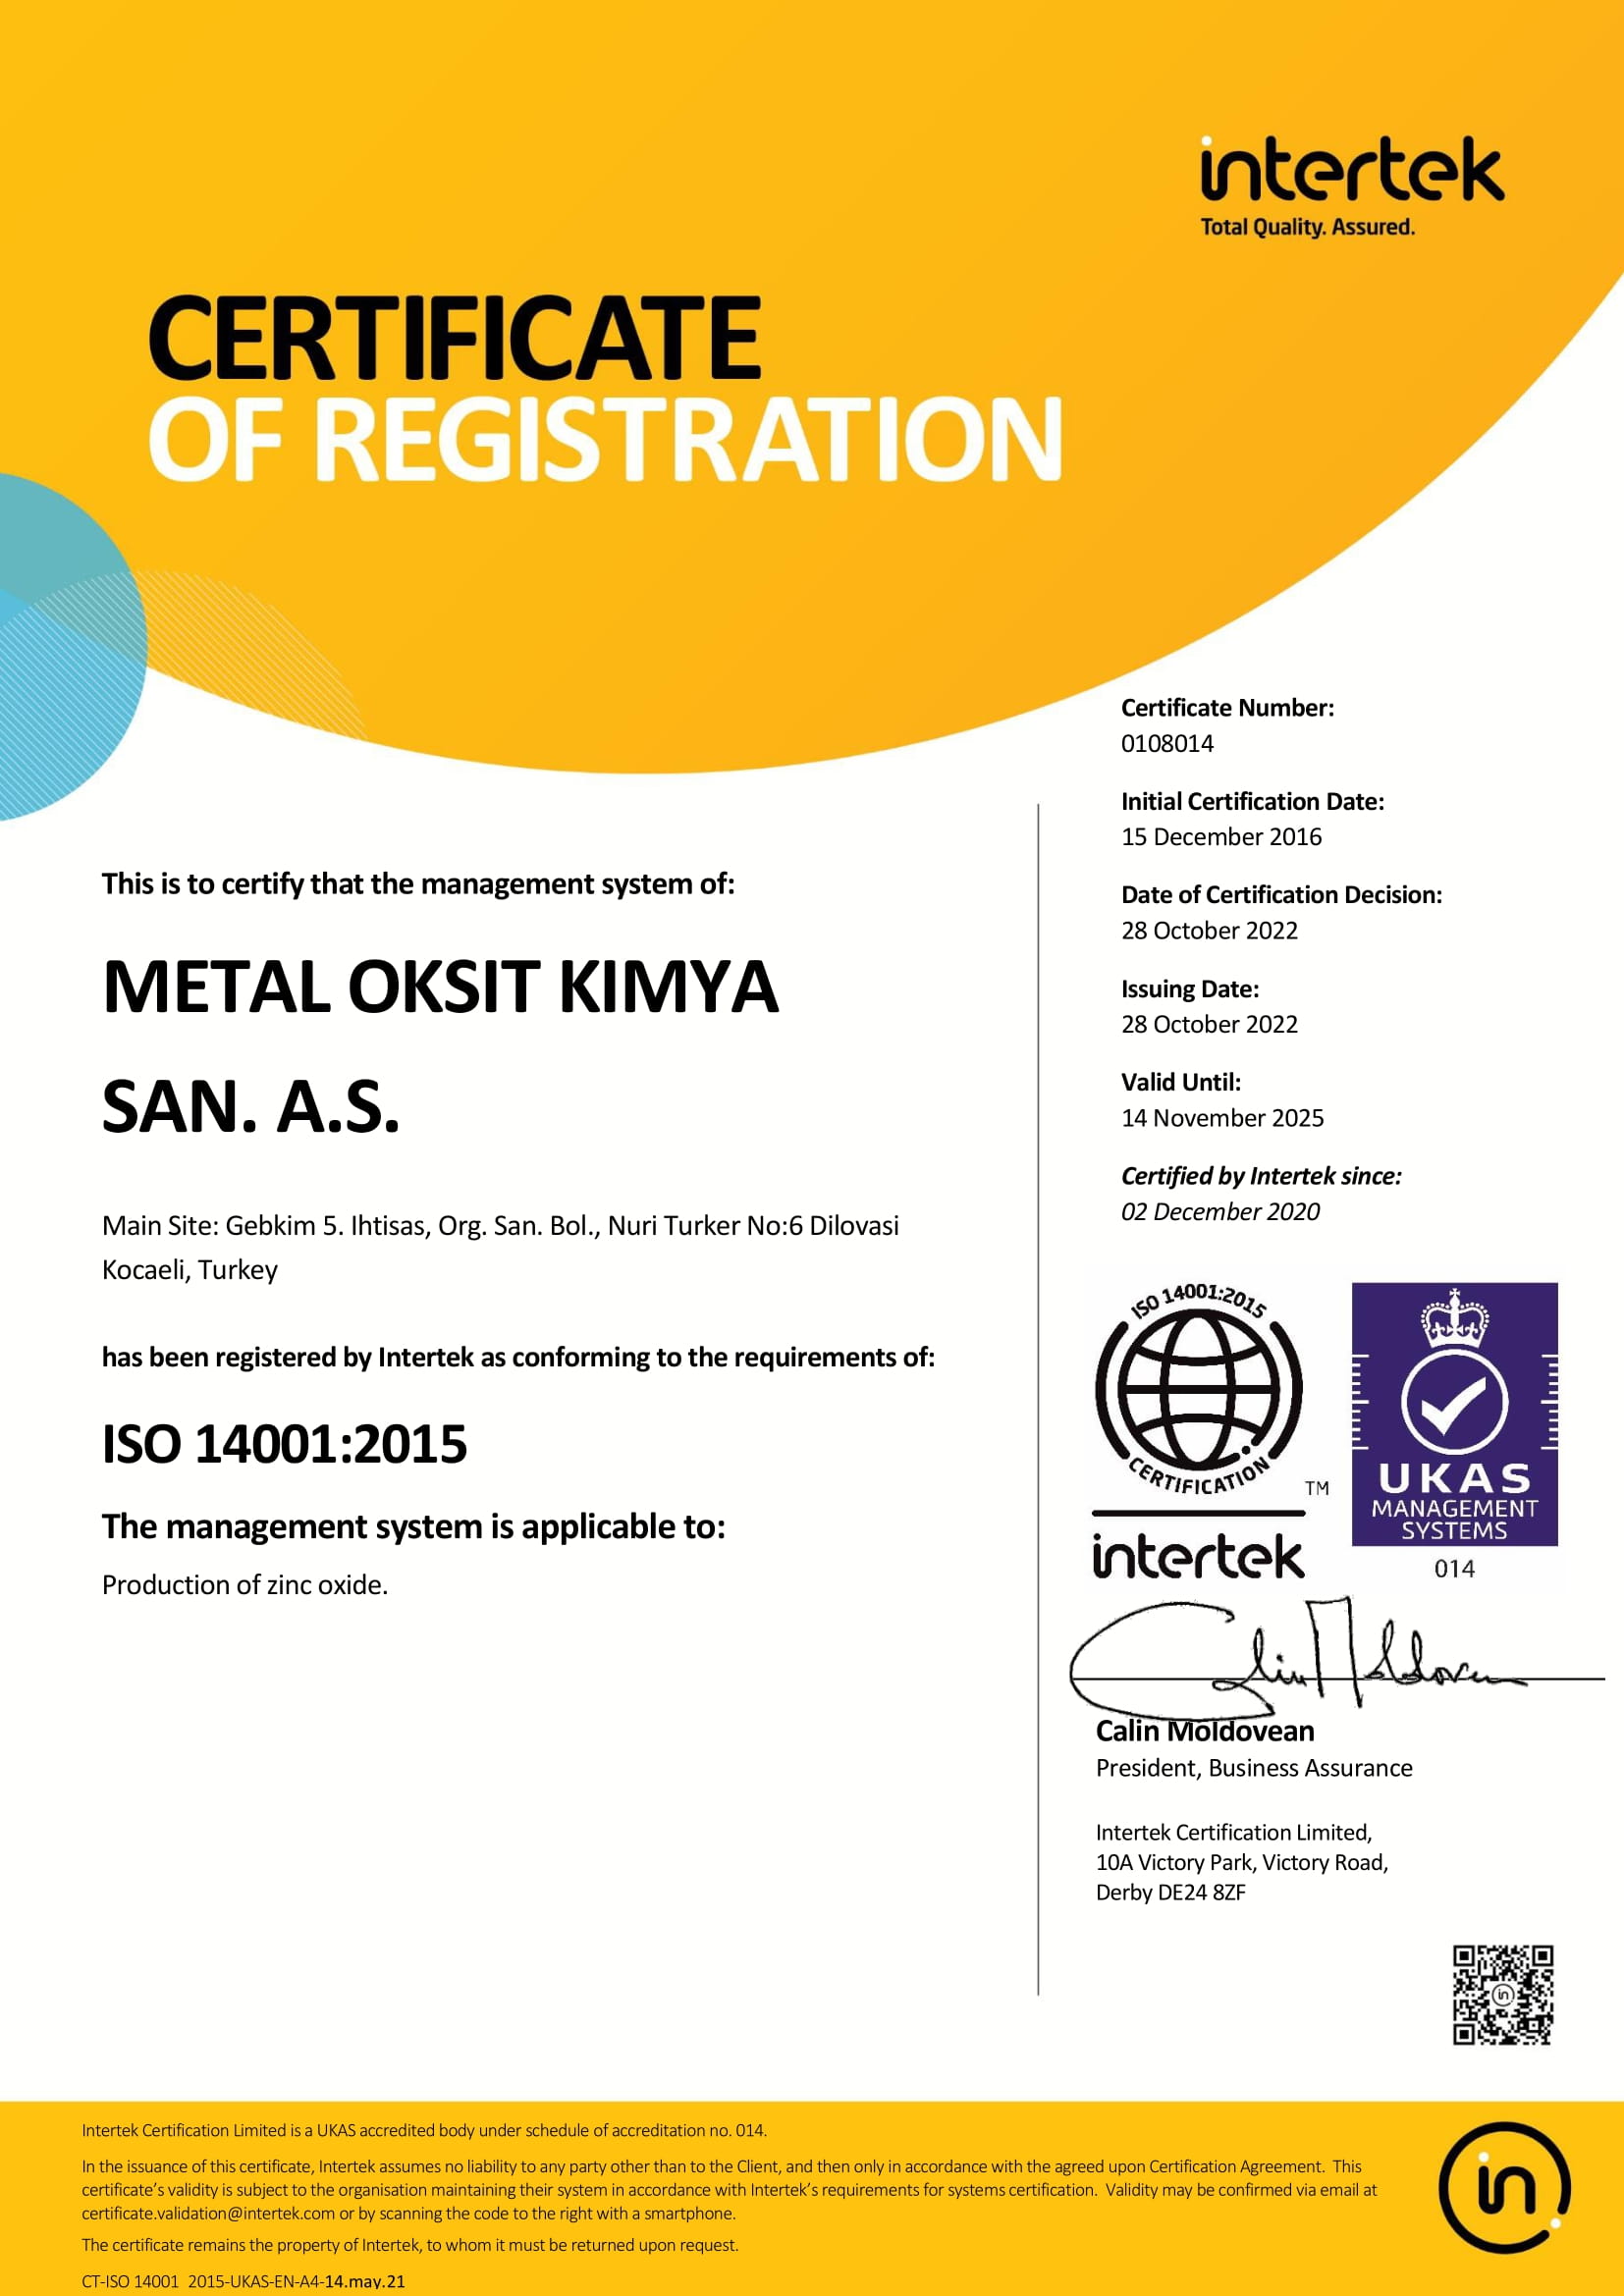 Metal Oksit Kimya Sanayi A.Ş.